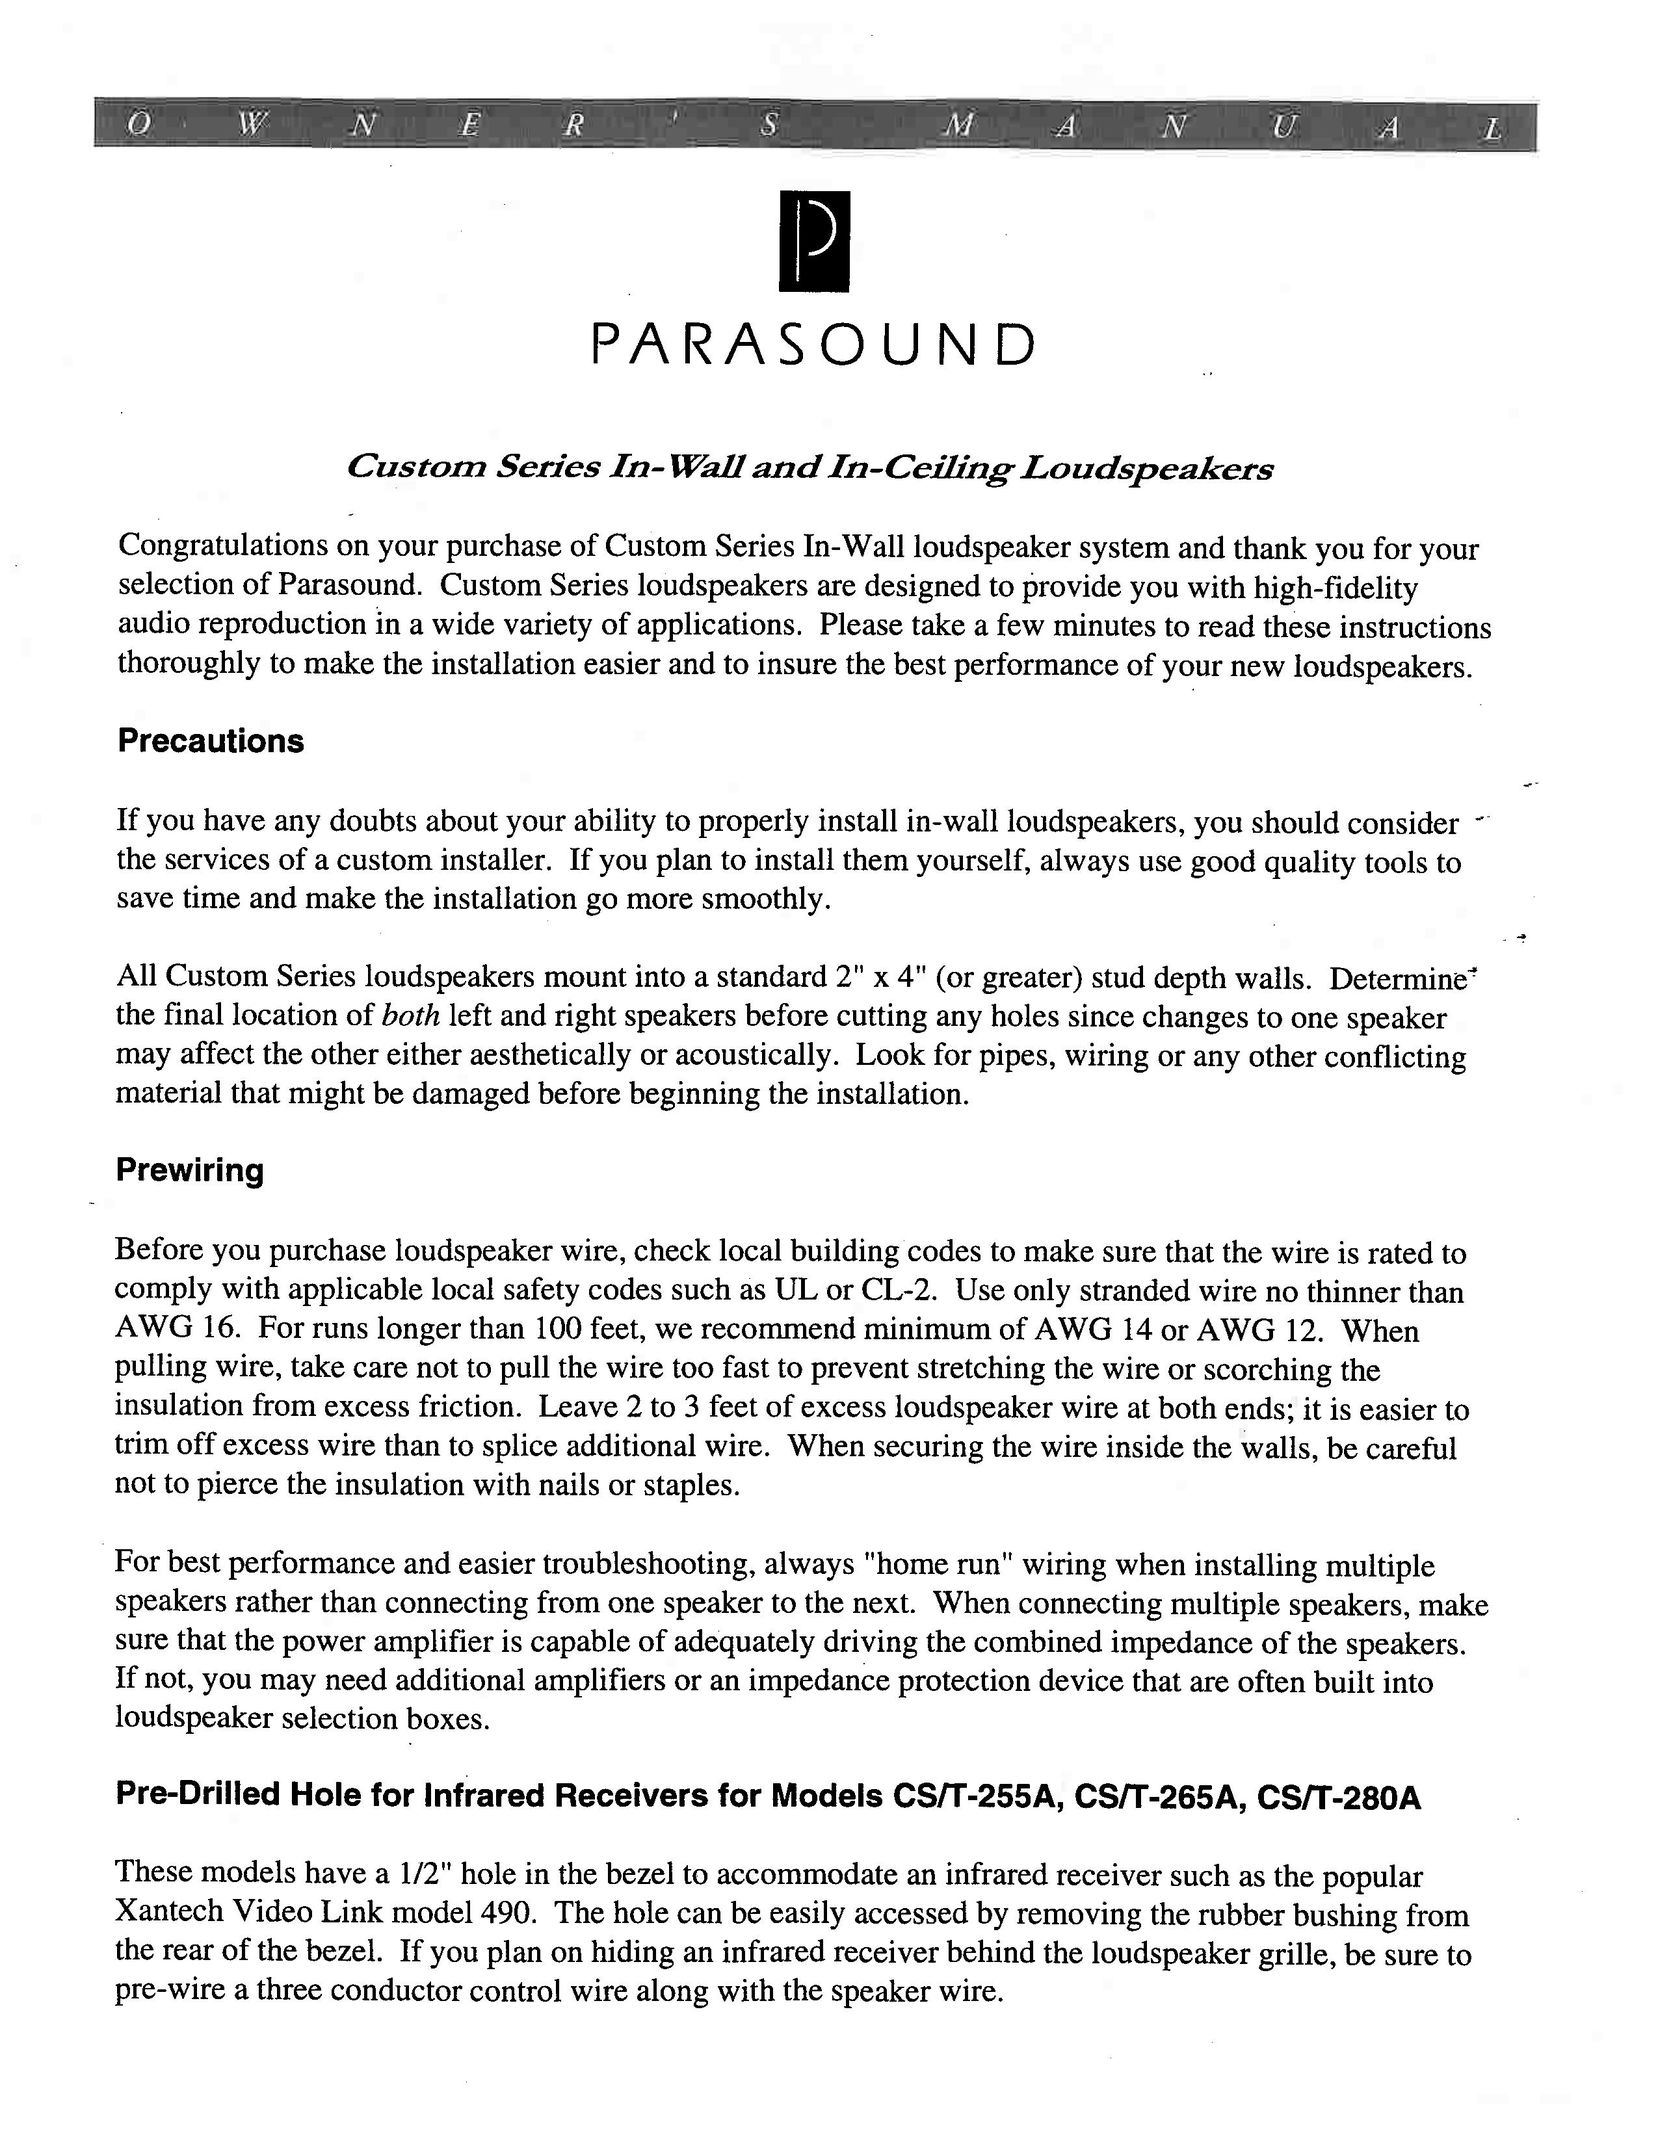 Parasound CS/T-265A Speaker User Manual